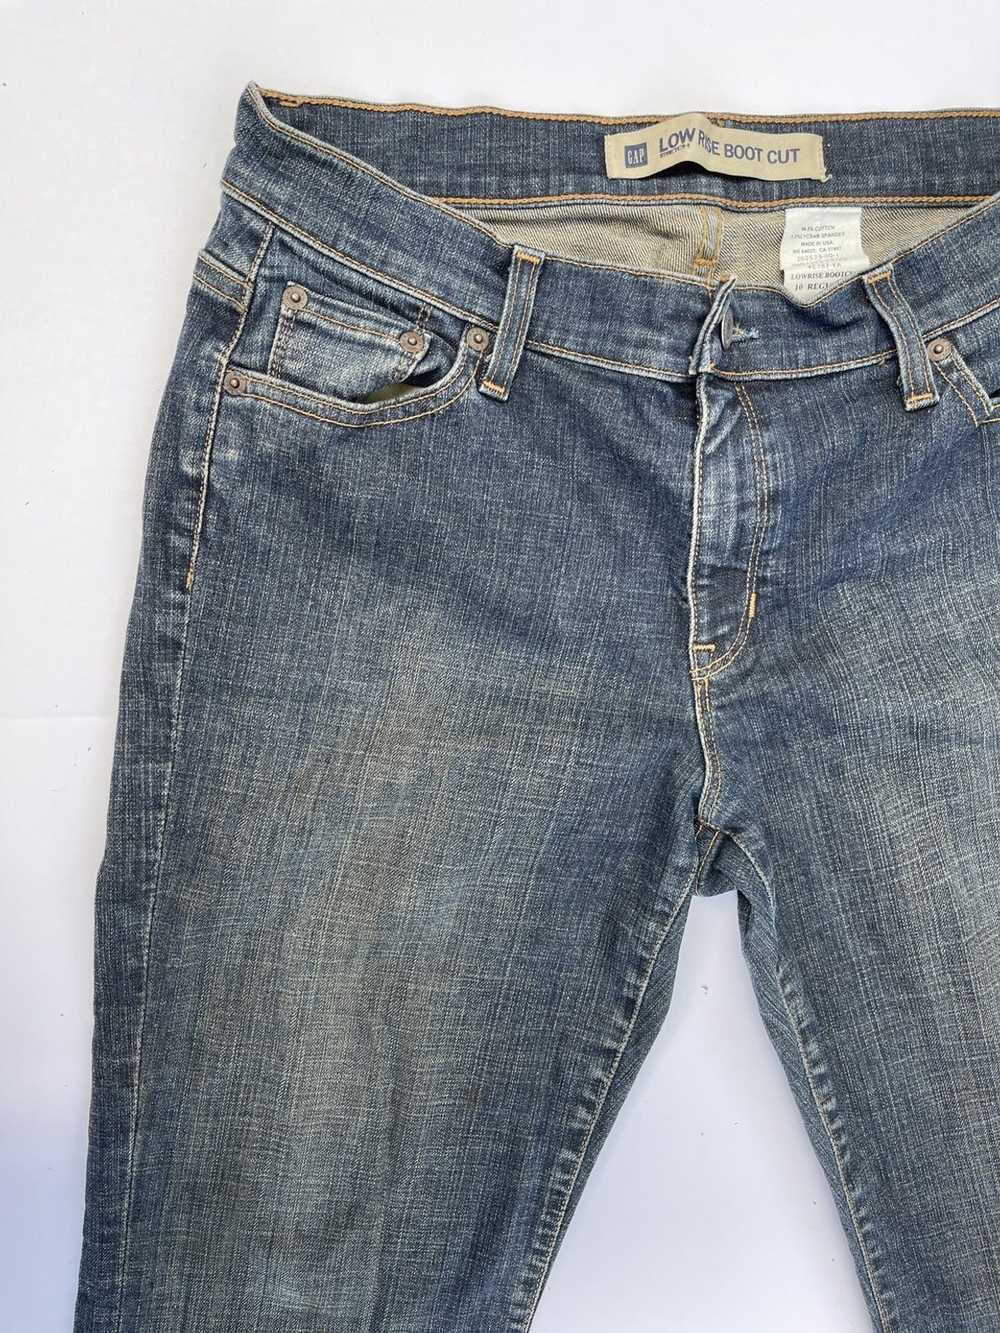 Gap Low Rise Boot Cut Jeans - image 2